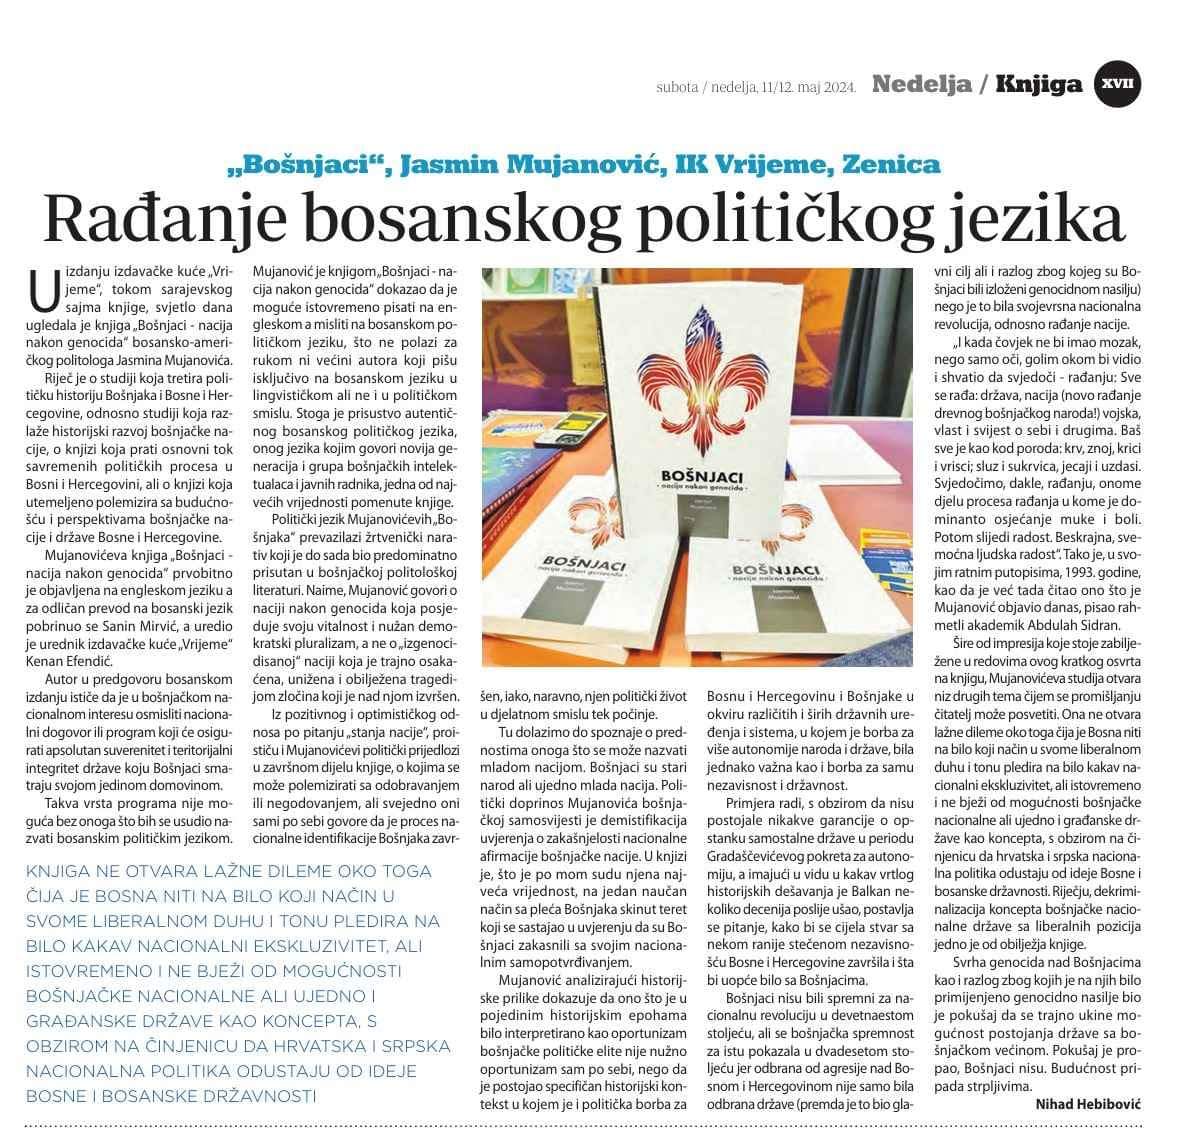 Prikaz knjige @JasminMuj 'Bošnjaci - nacija nakon genocida' u beogradskom listu @OnlineDanas